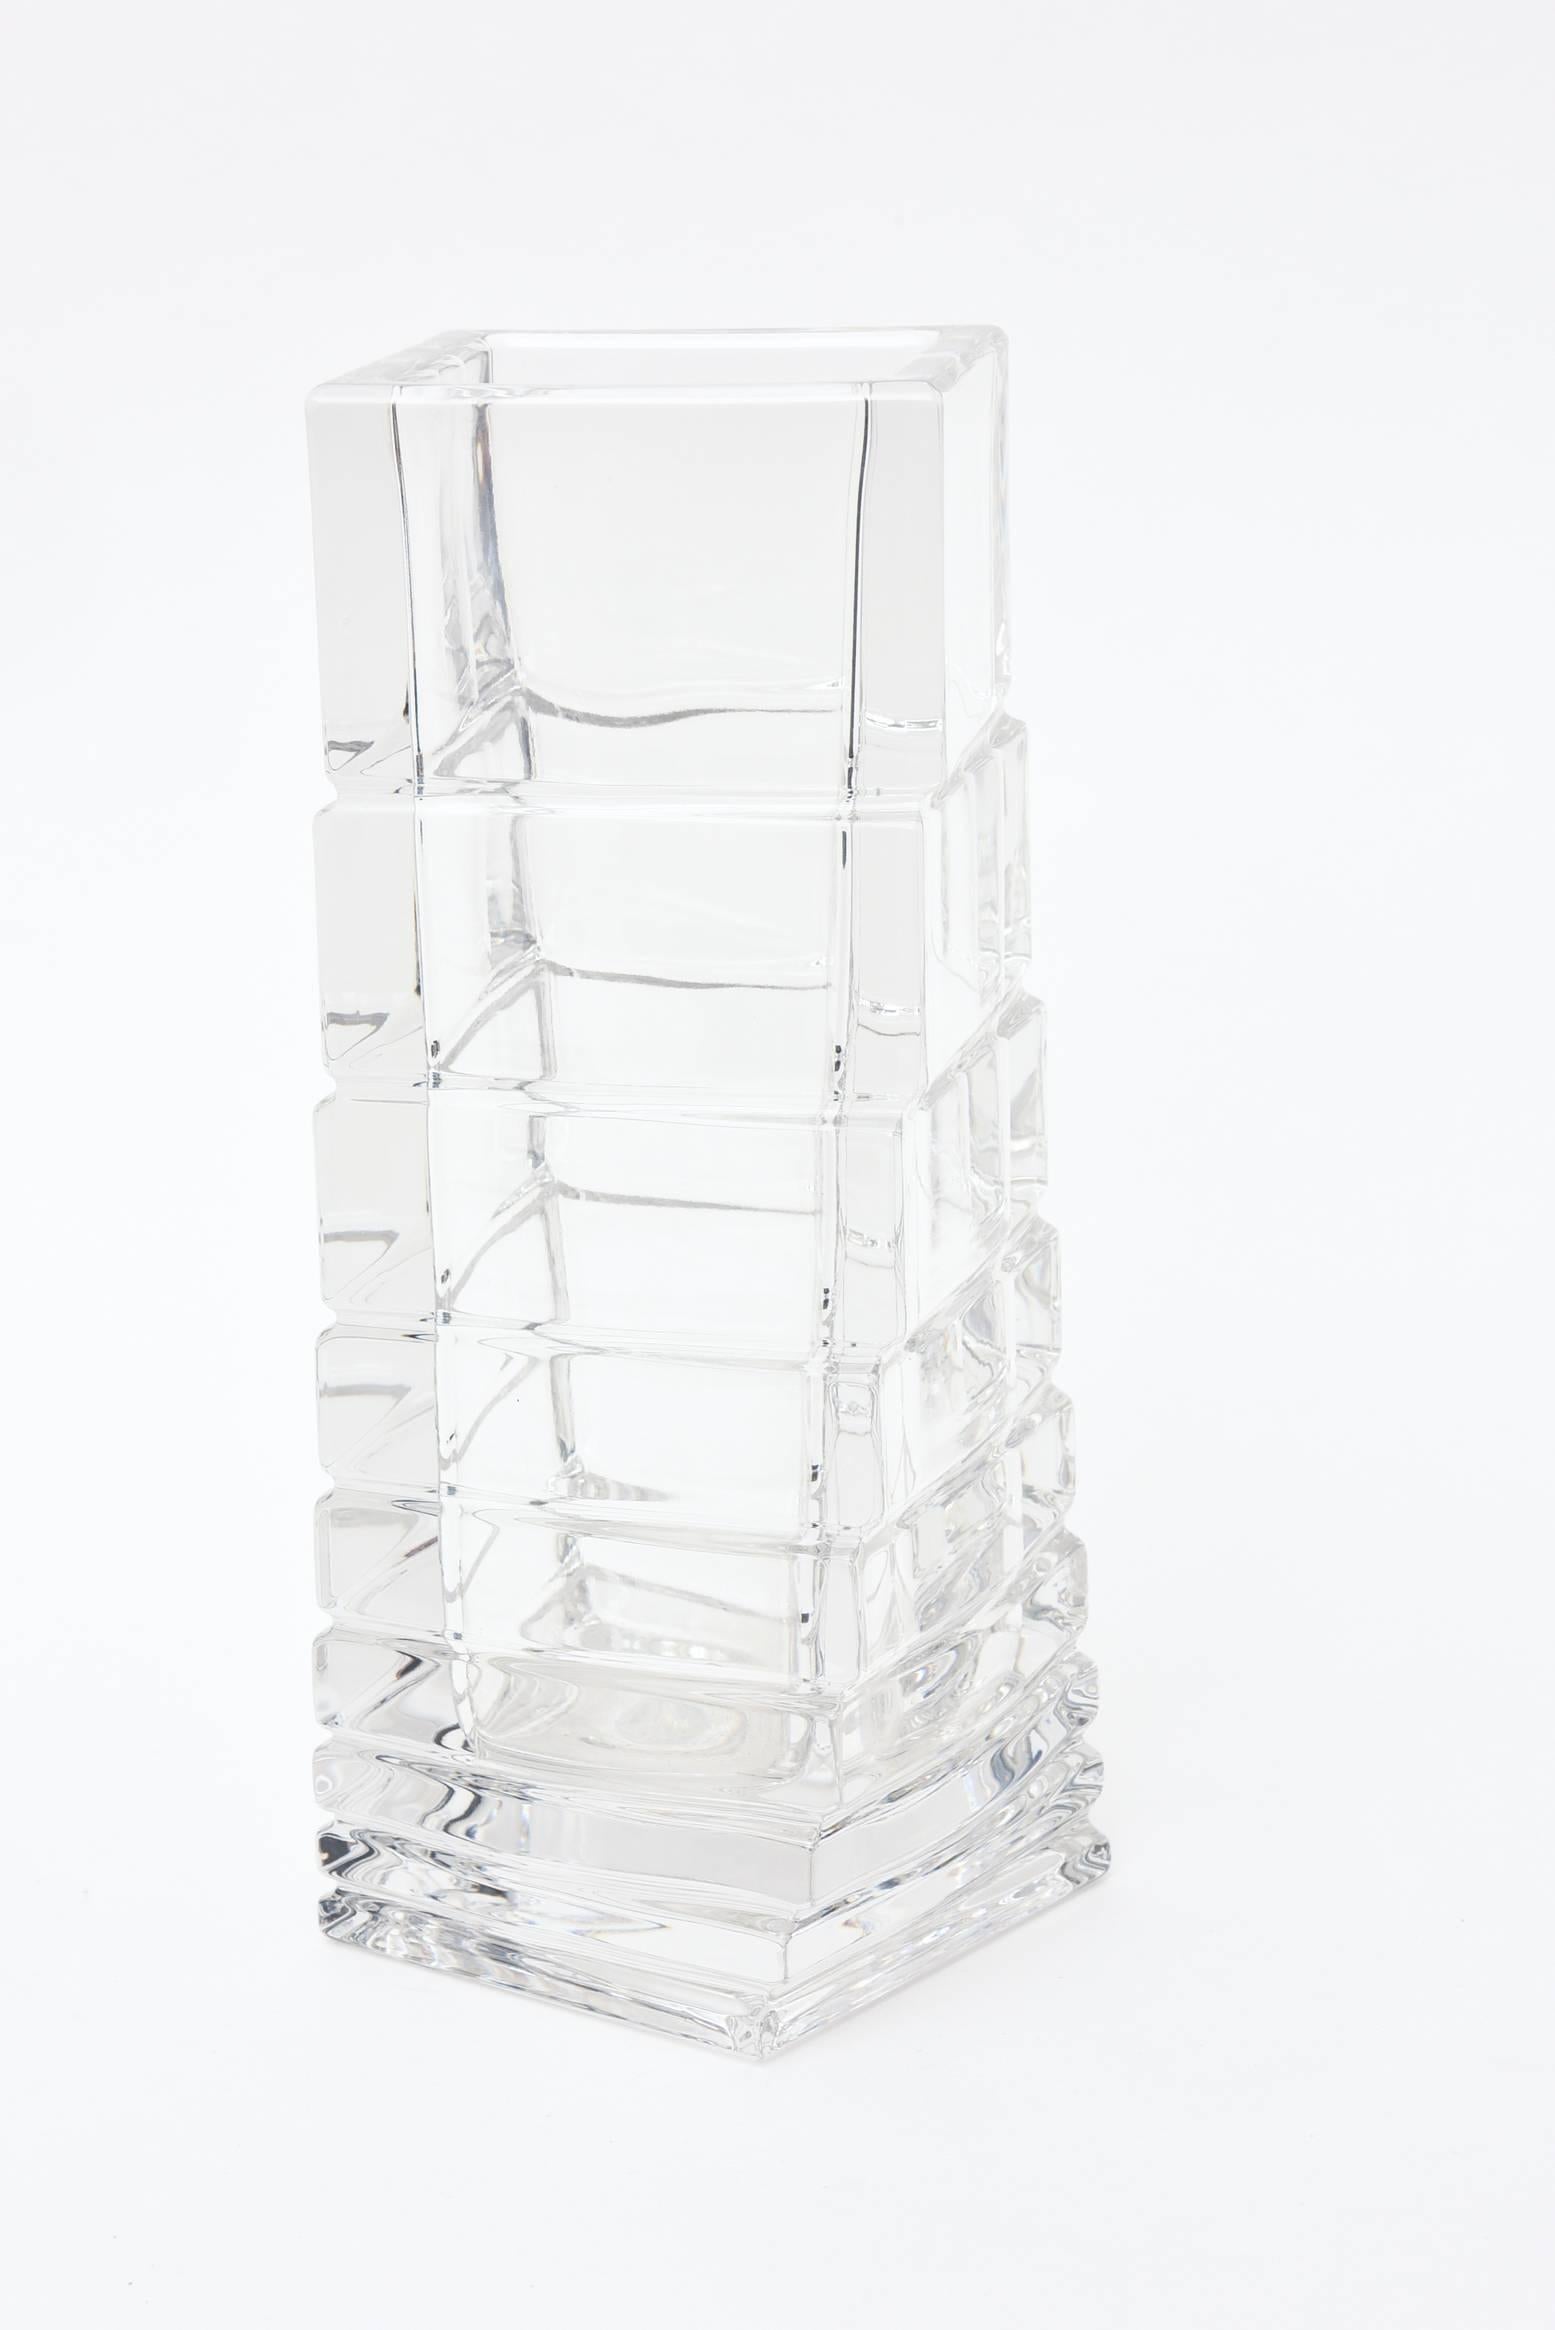 twisted glass vase